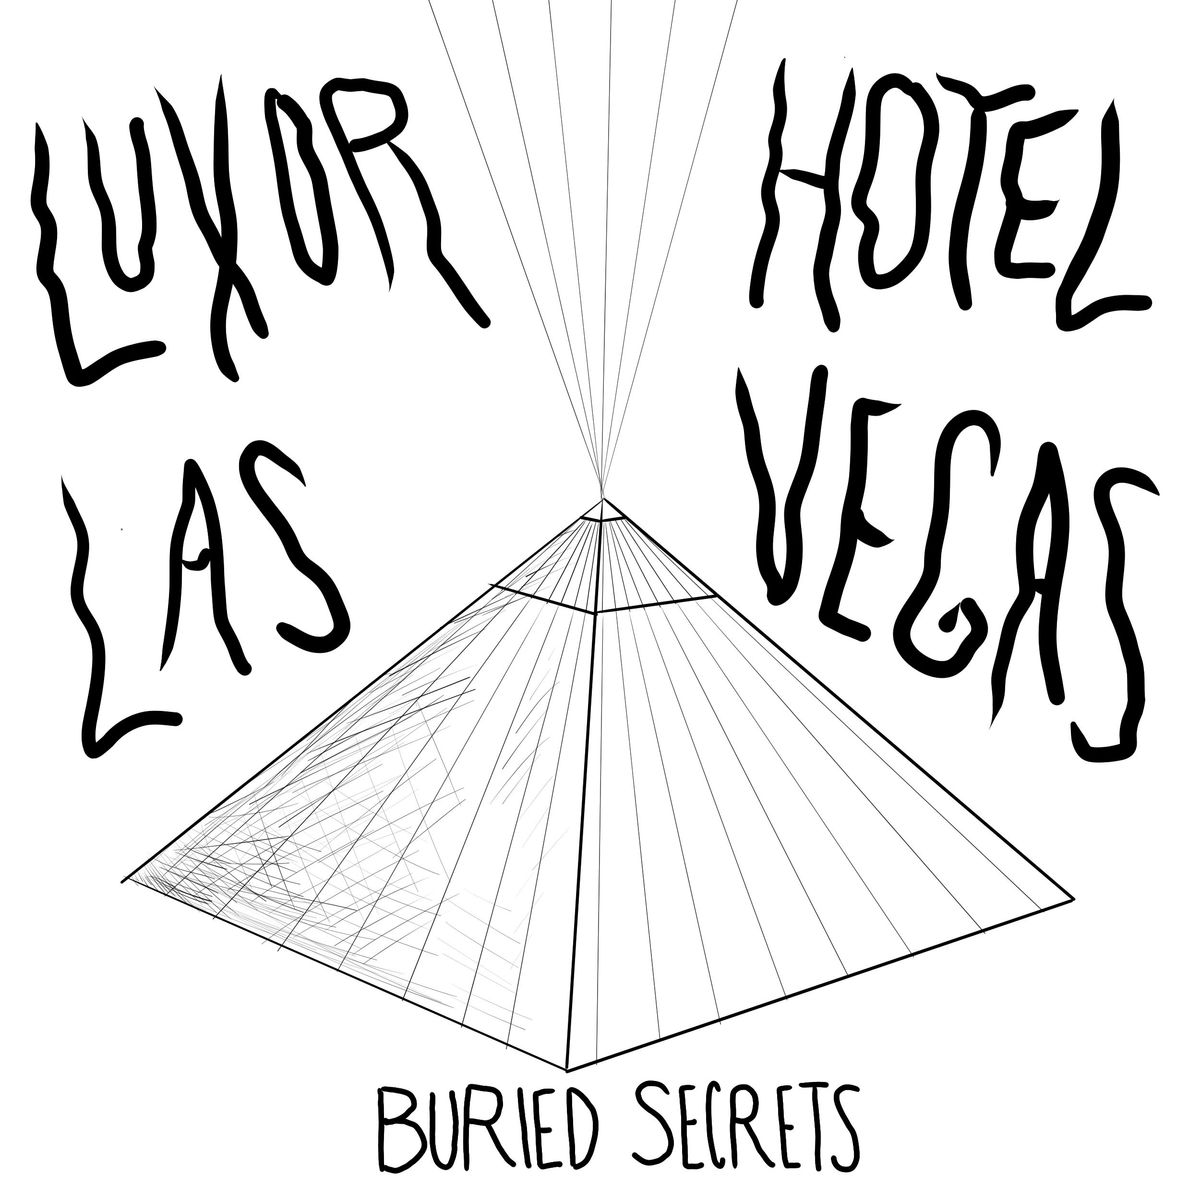 The Haunted Luxor Hotel and Casino, Las Vegas: Part 1